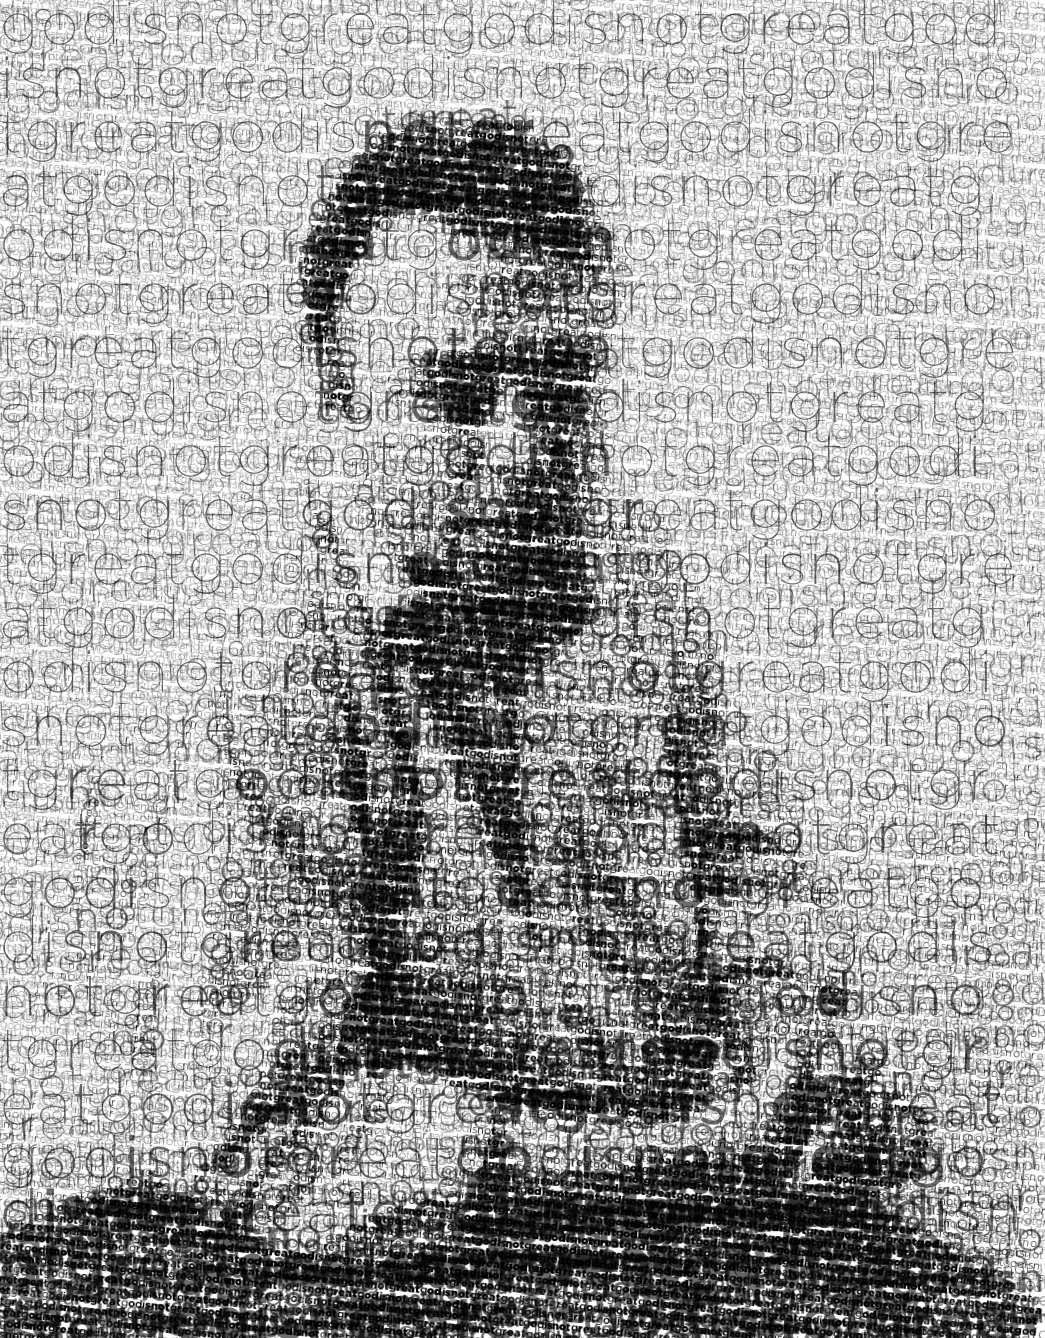 Christopher Hitchens - ASCII Art / Martin Krzywinski @MKrzywinski mkweb.bcgsc.ca